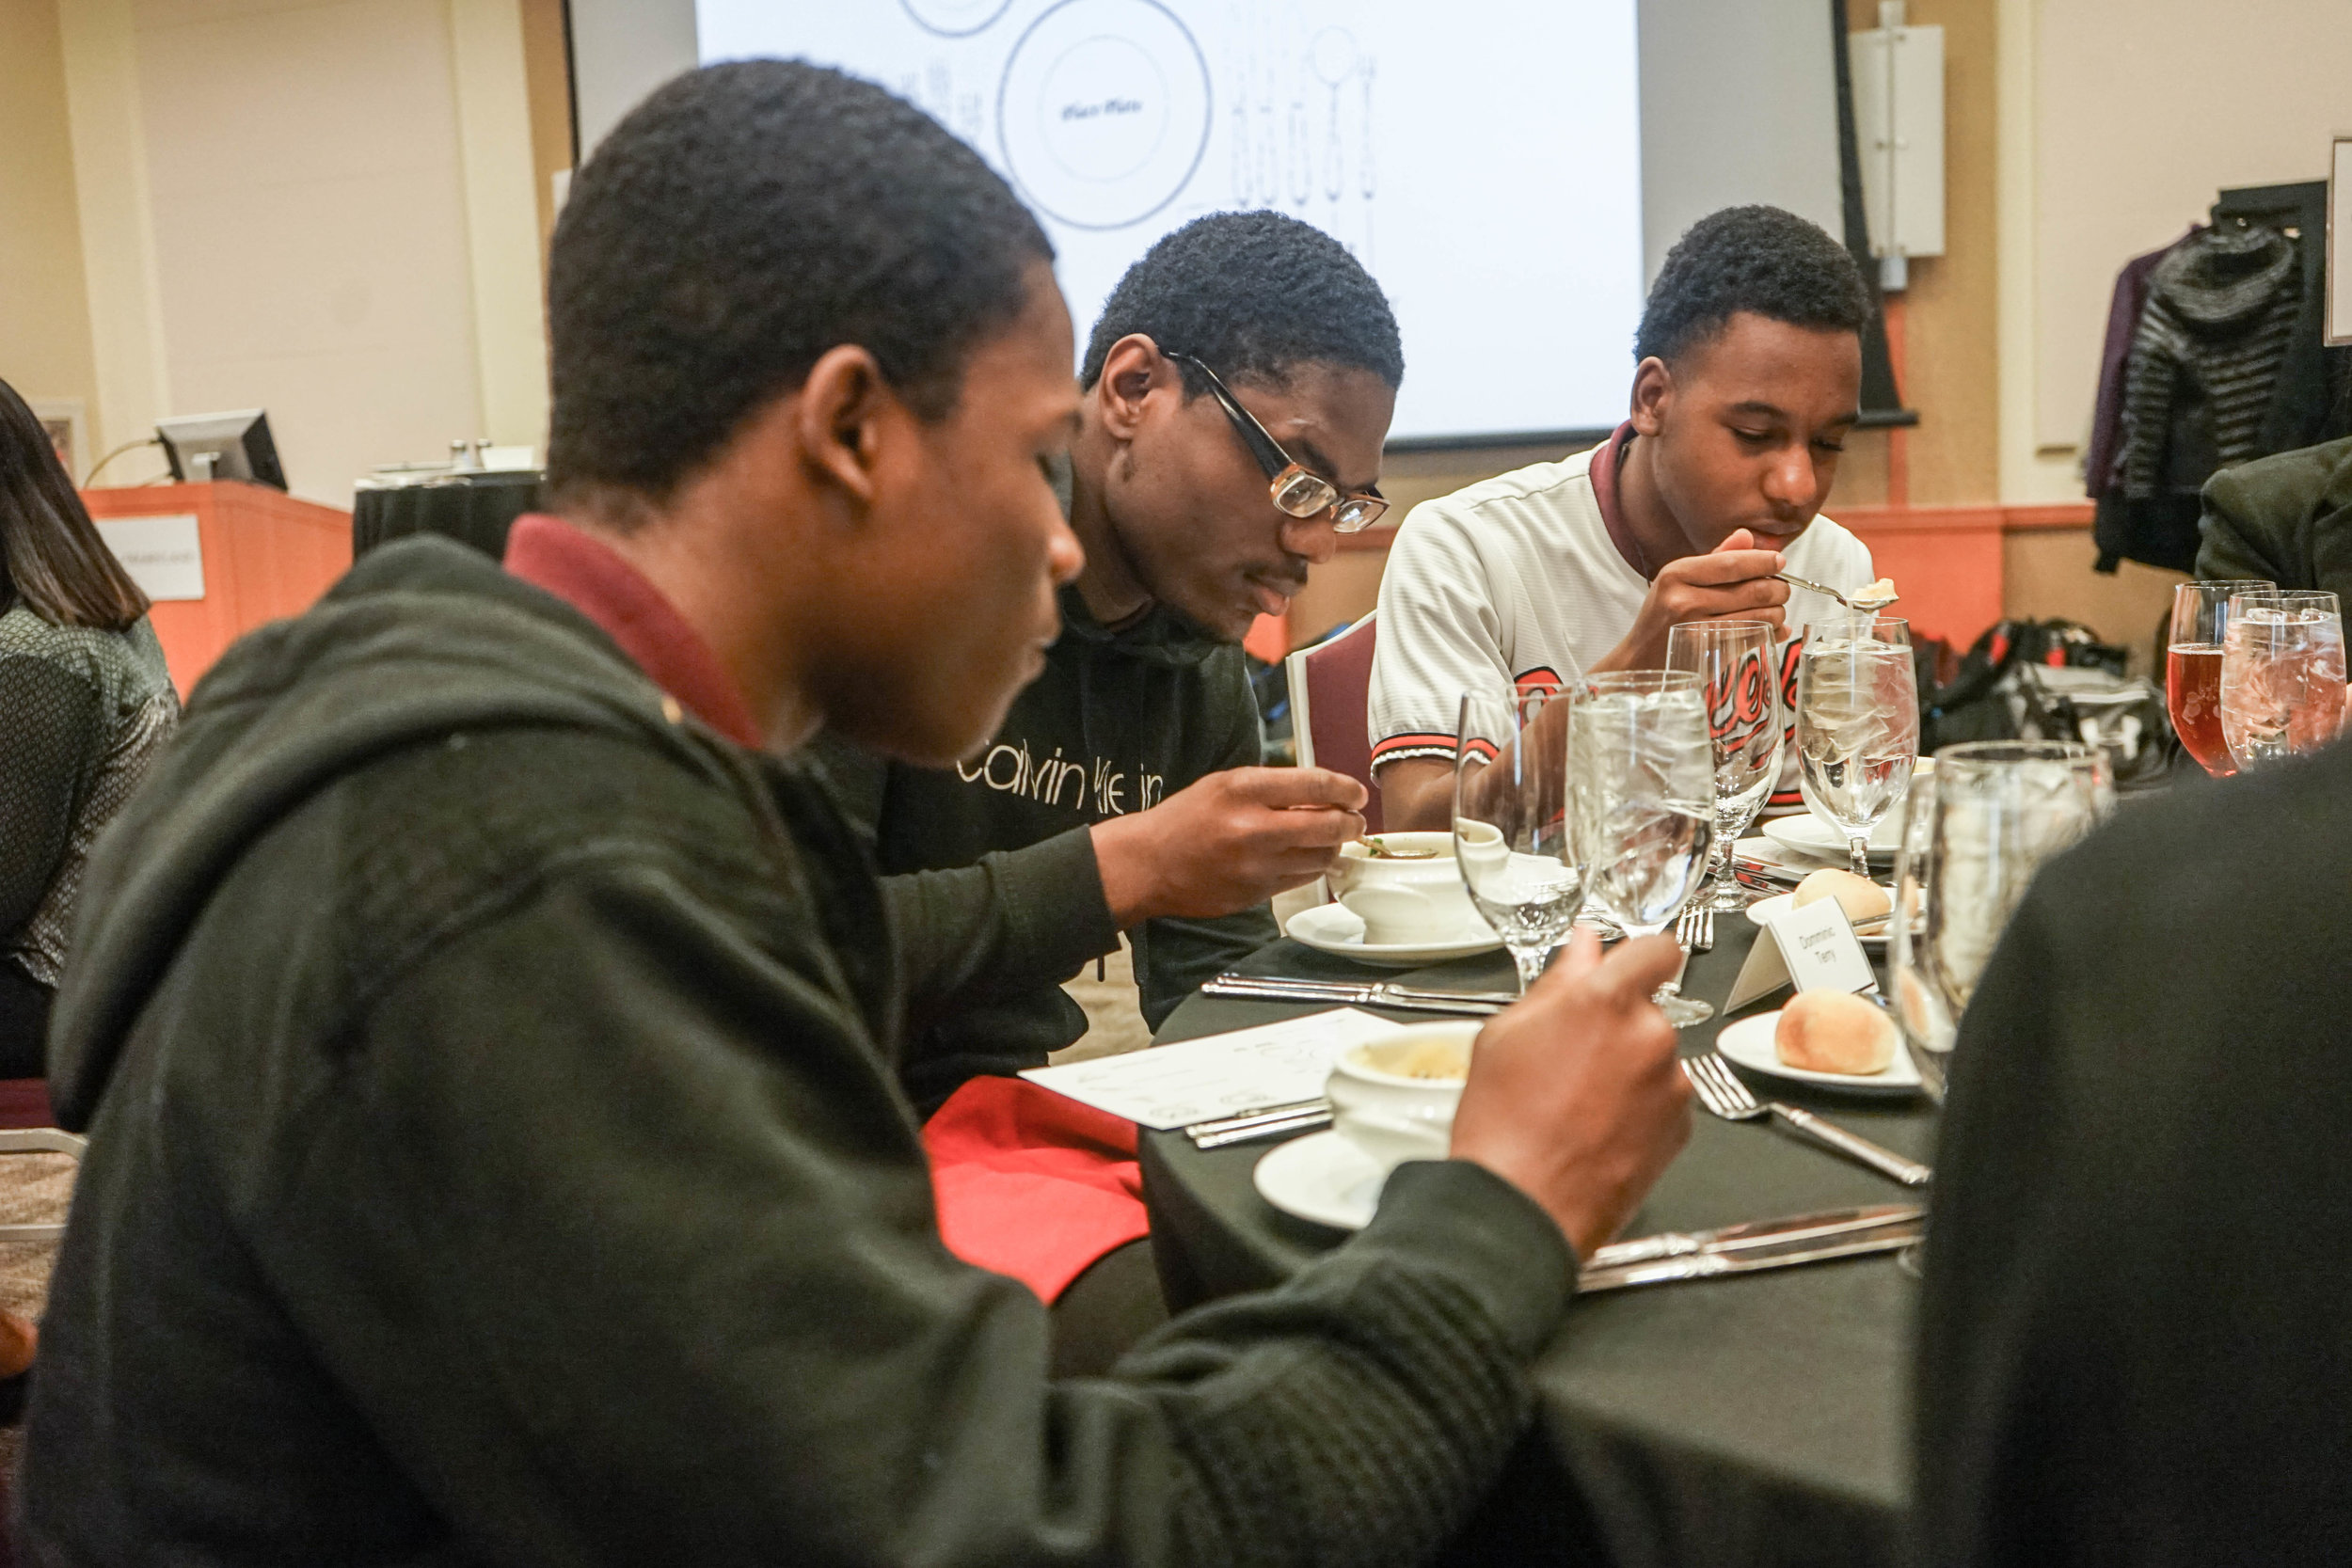 Students eating dinner